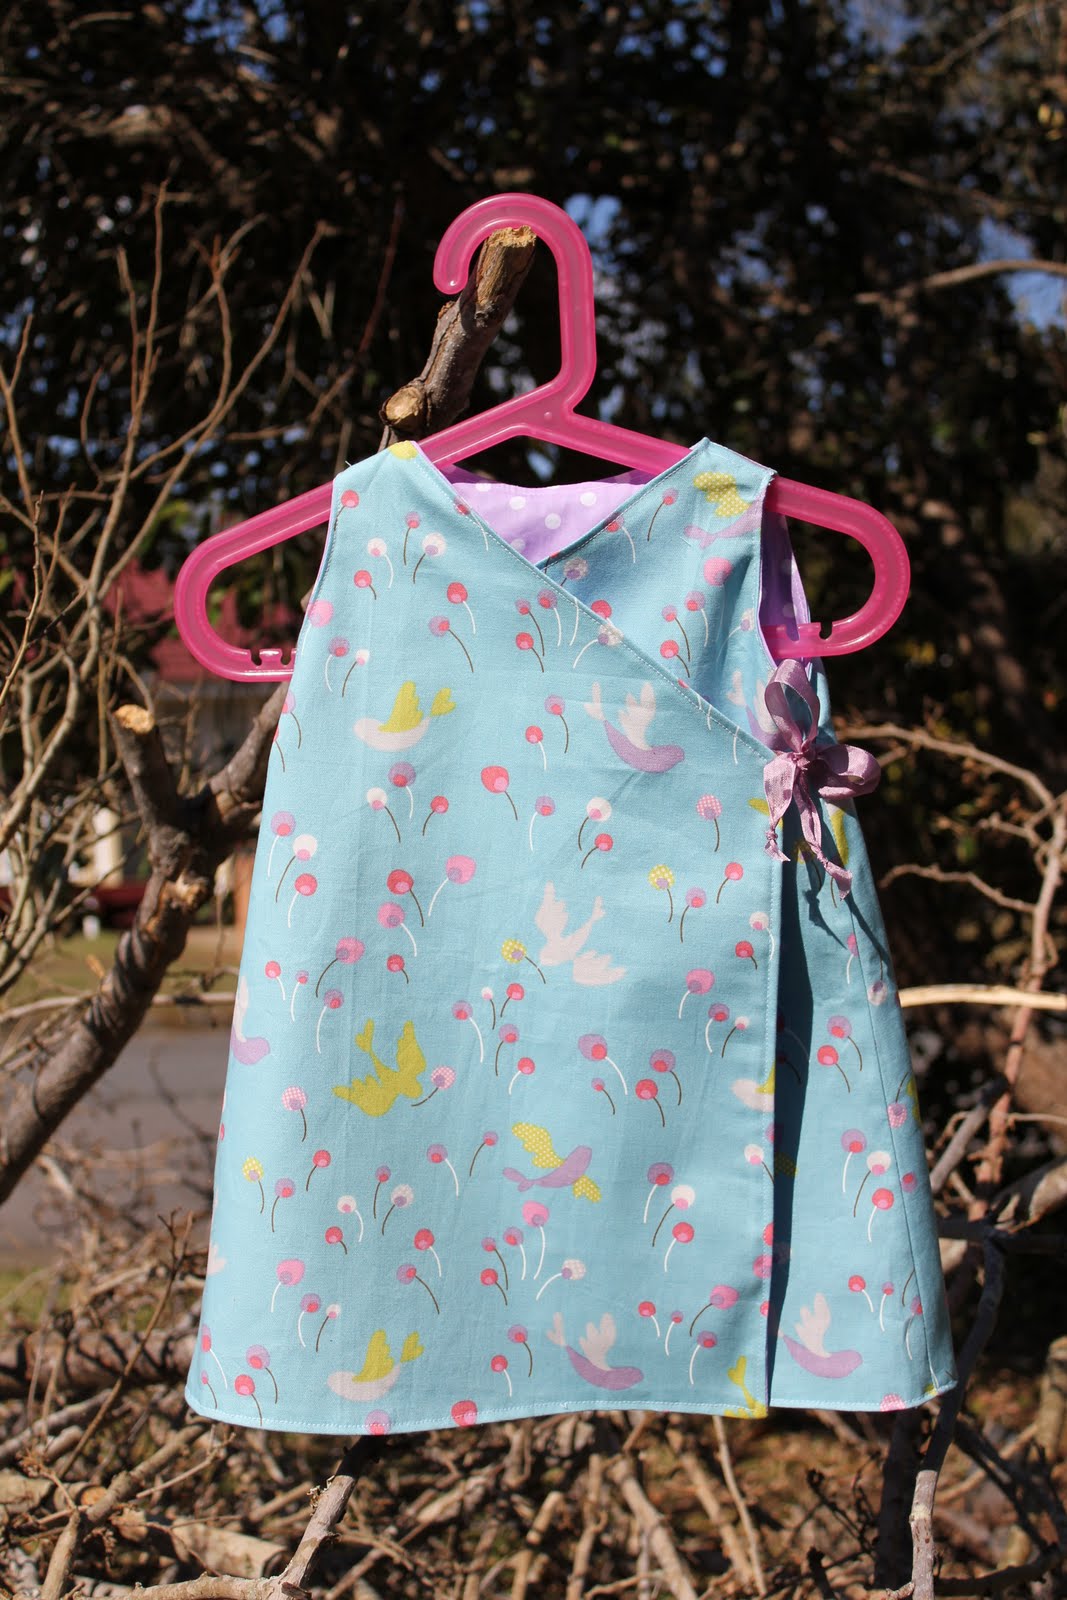 thom haus handmade: Simple Girl's Kimono Dress